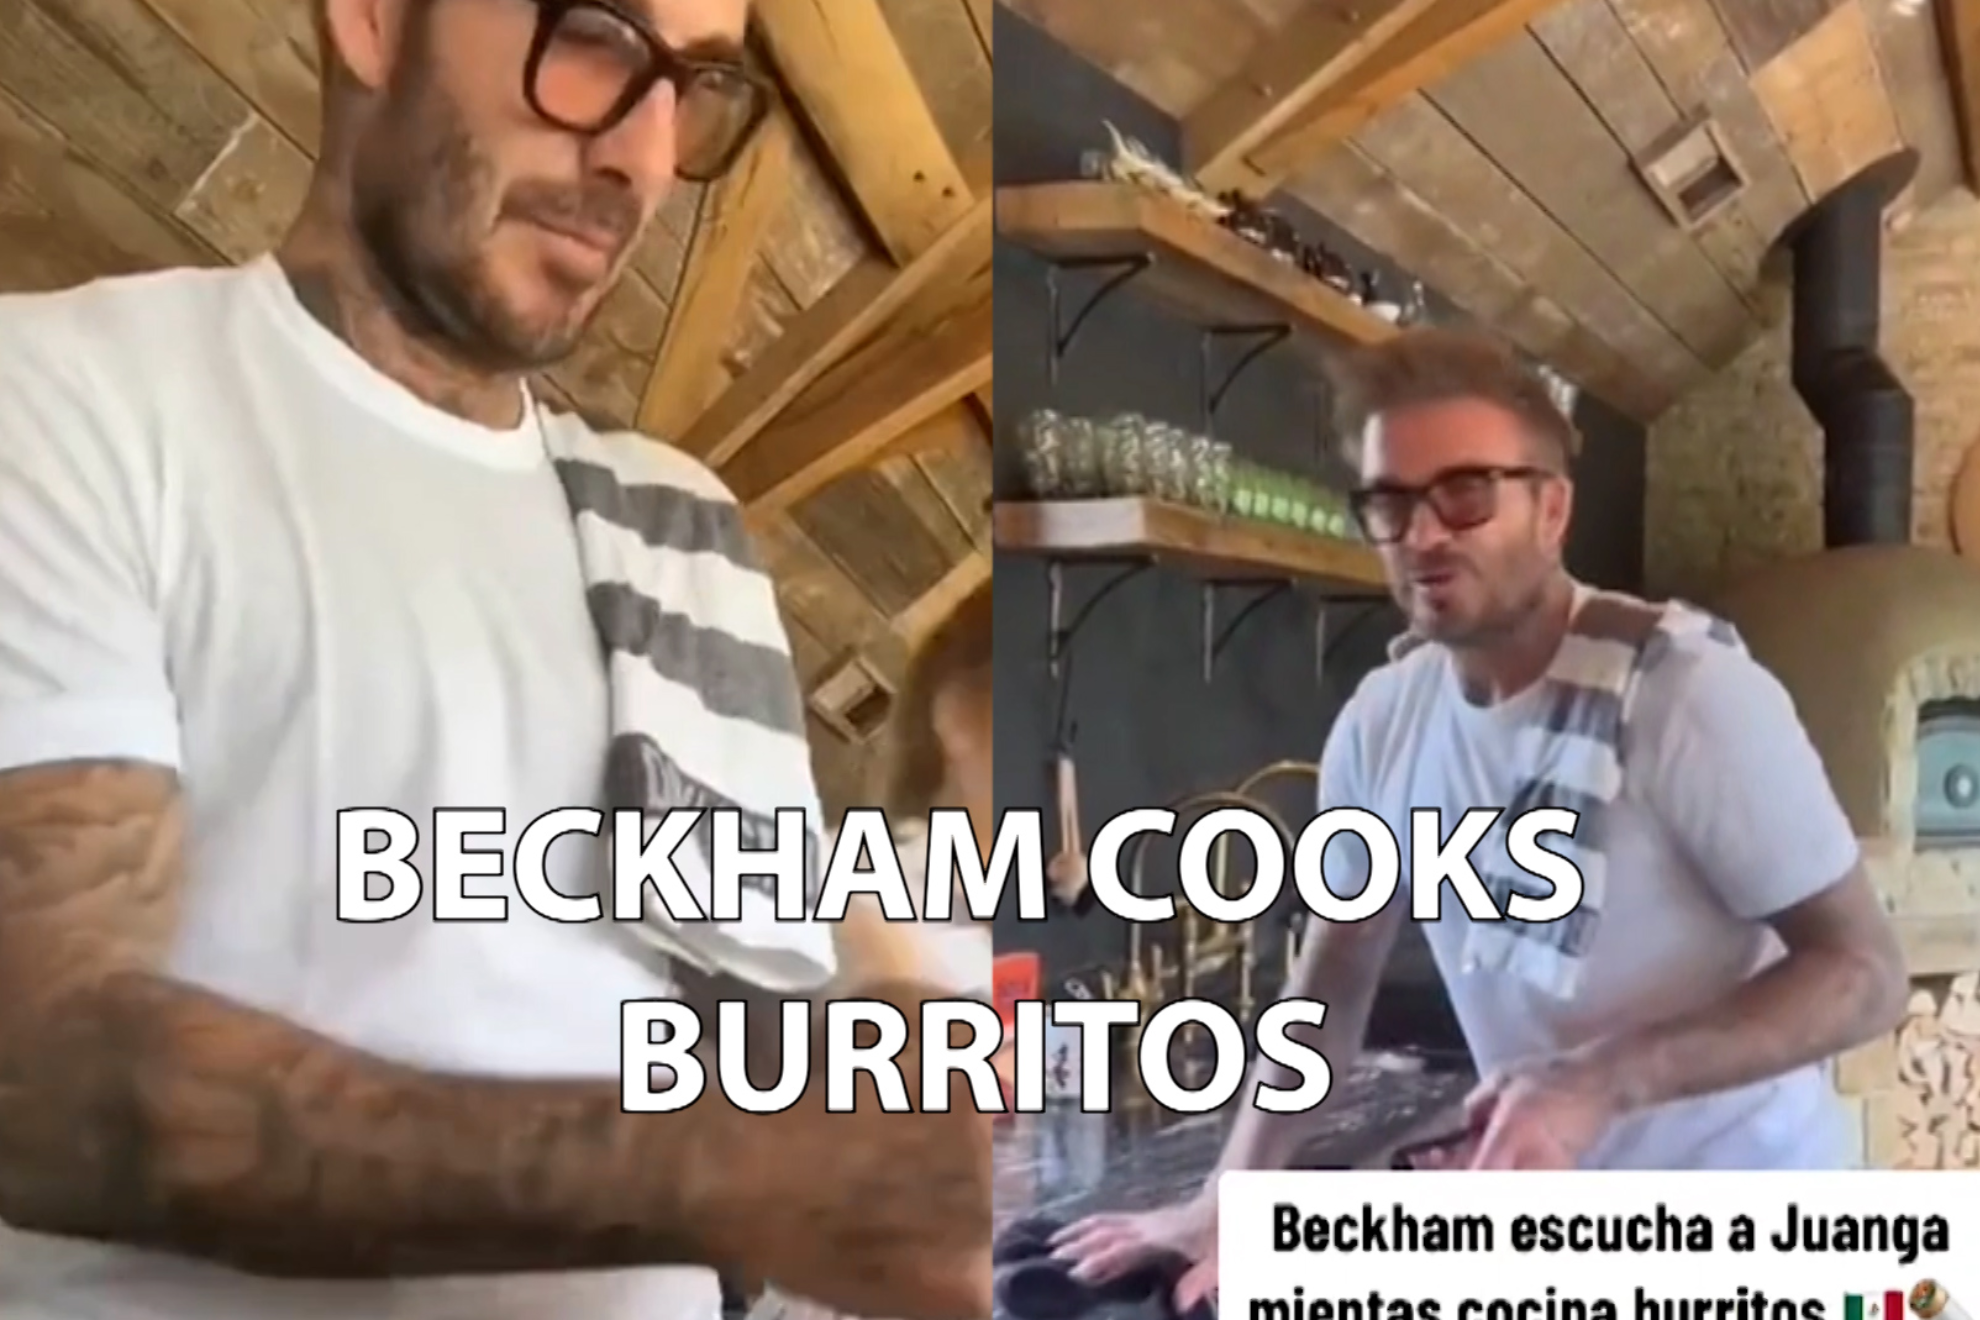 Beckham can't resist Juan Gabriel: listens to the 'Divo de Juarez' while cooking burritos